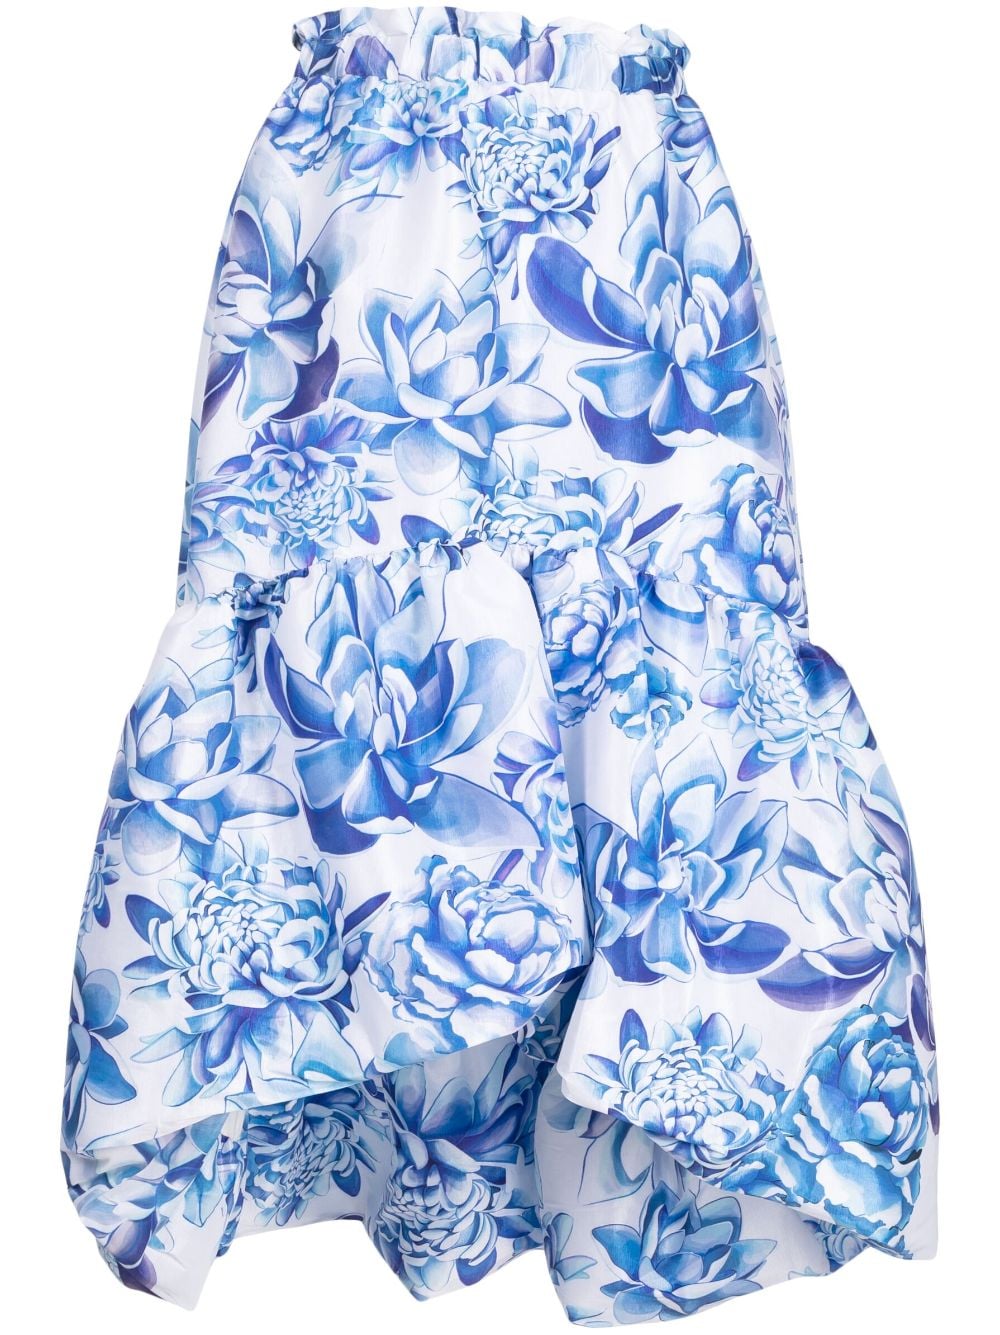 floral-print asymmetric skirt